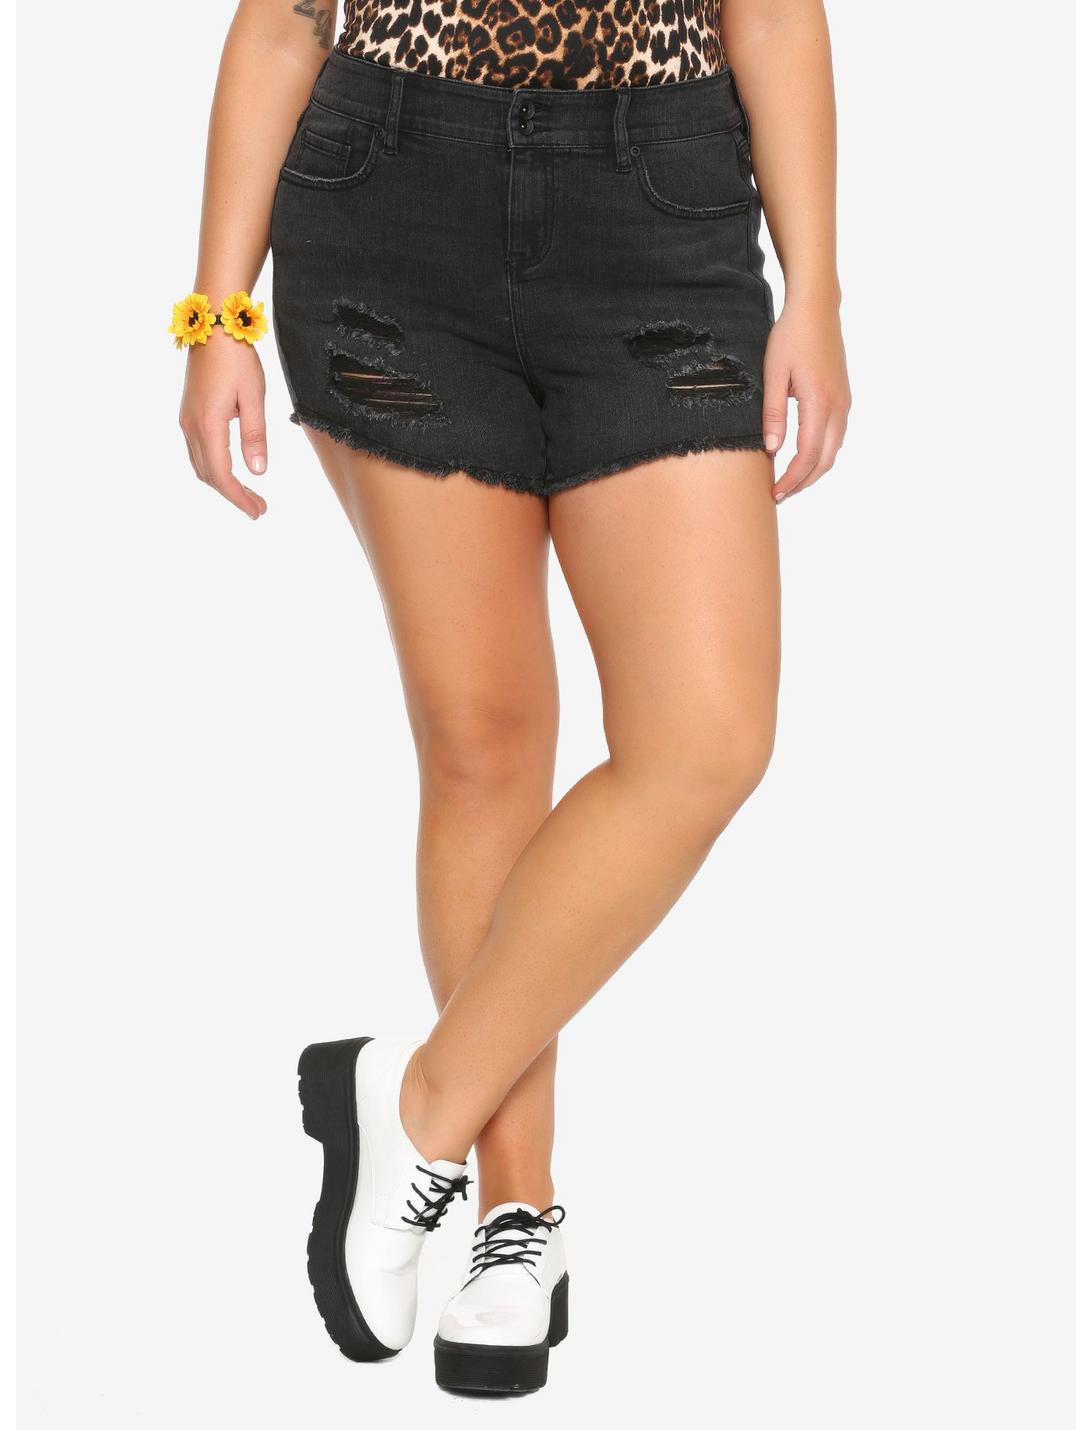 Black Wash Distressed Denim Shorts Plus Size, BLACK, hi-res